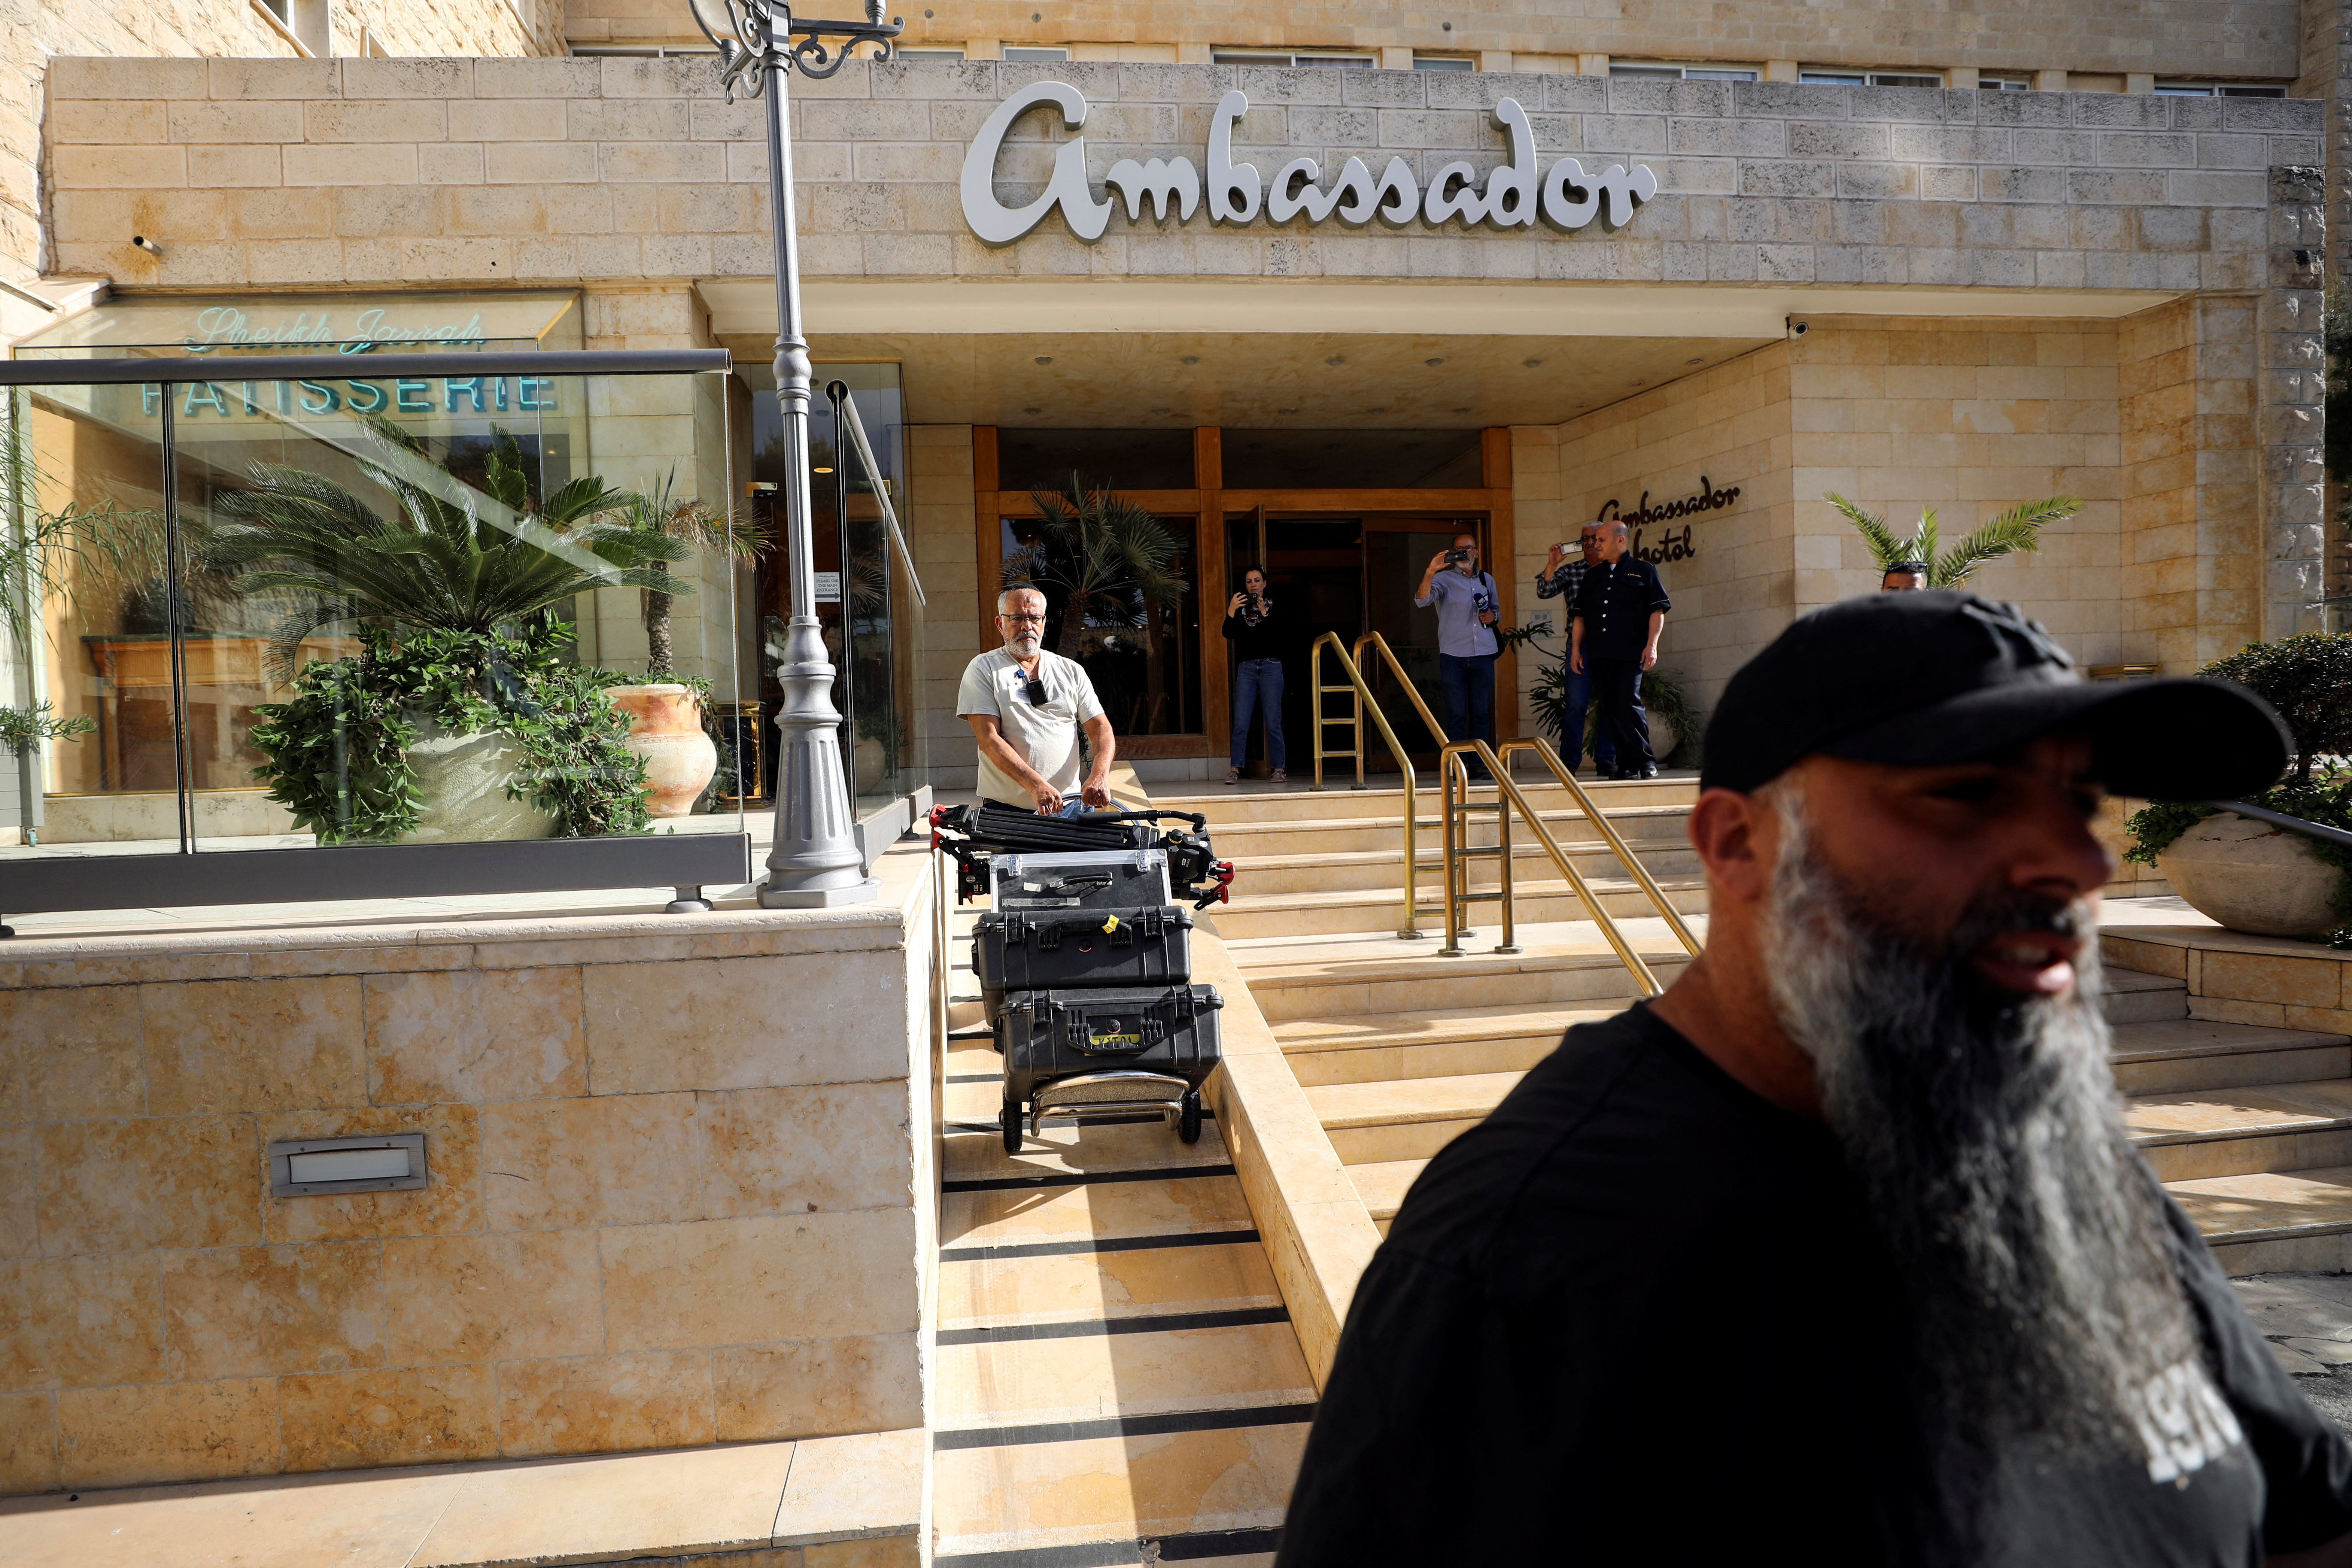 A man maneuvers media equipment following an Israeli police raid on an Al Jazeera de facto office at the Ambassador Hotel in Jerusalem